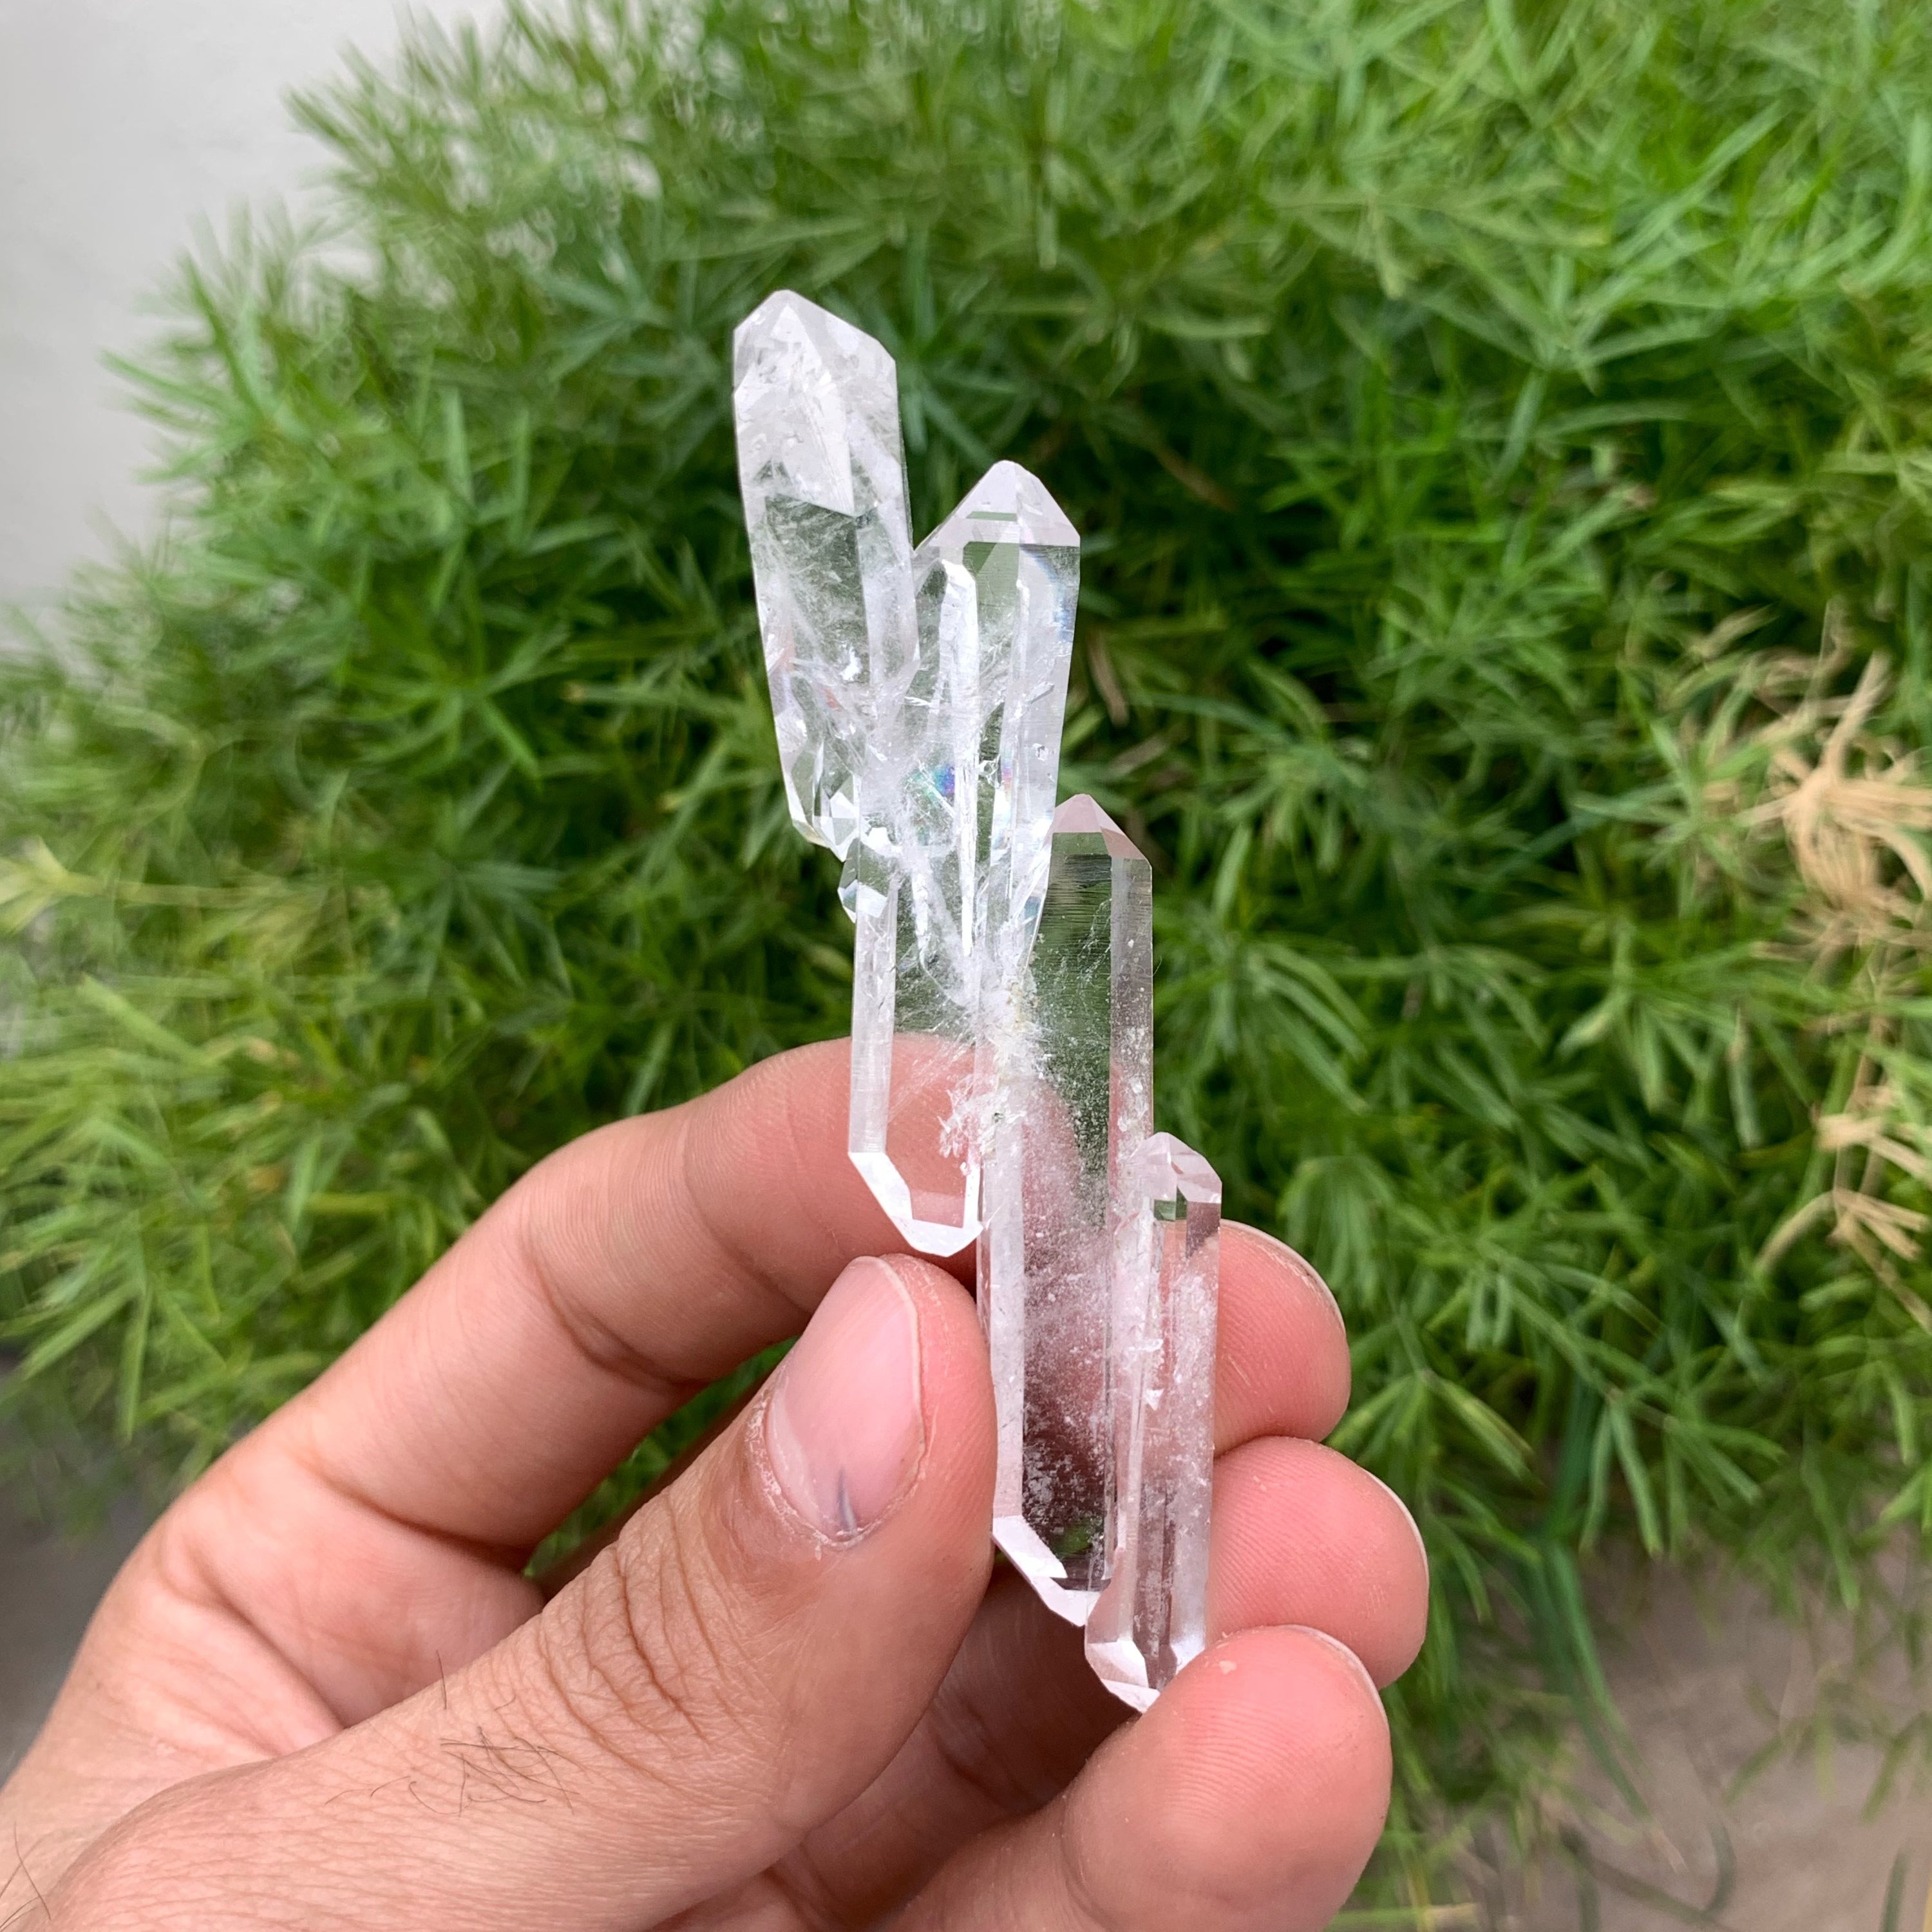 Pretty And Impressive Aggregate Of Elongated Quartz Crystals